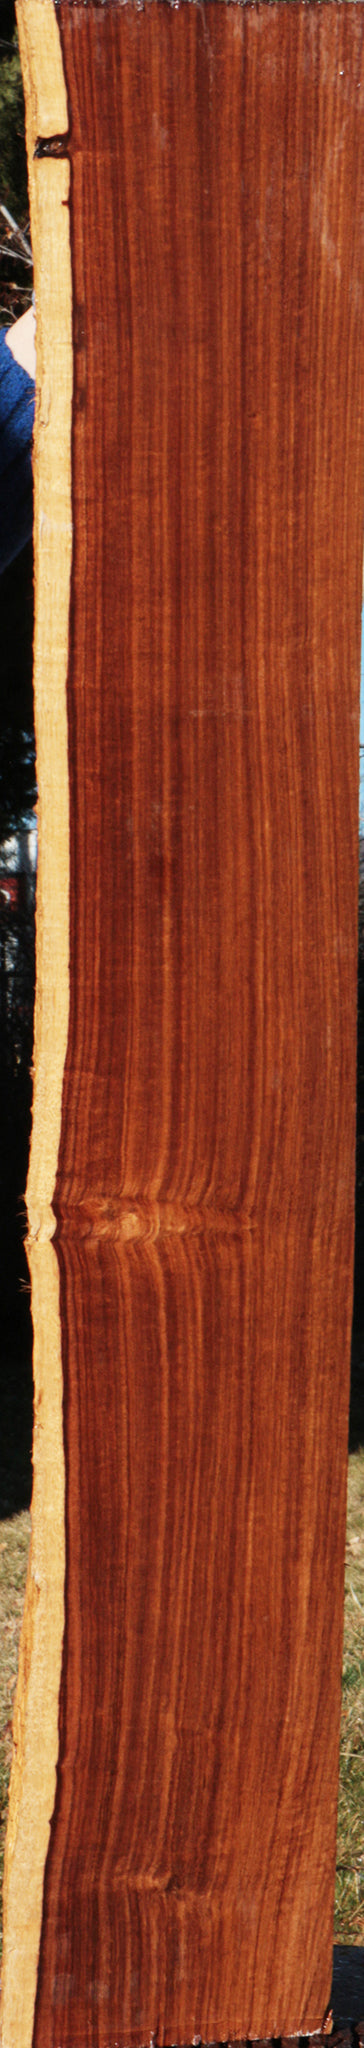 Granadillo Live Edge Lumber